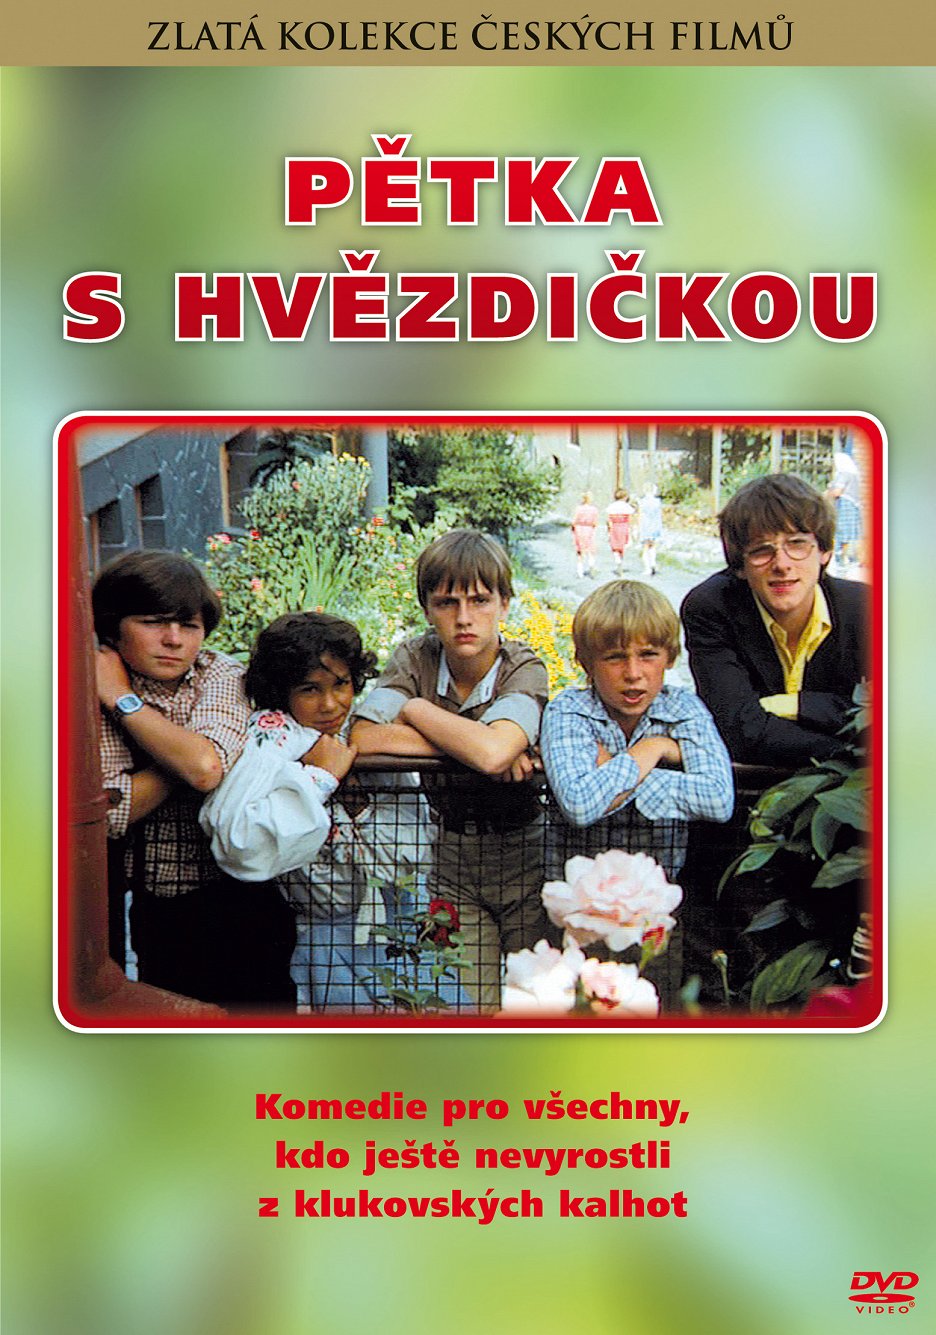 Stiahni si Filmy CZ/SK dabing Petka s hvezdickou (1985) HDTV. CZ = CSFD 71%